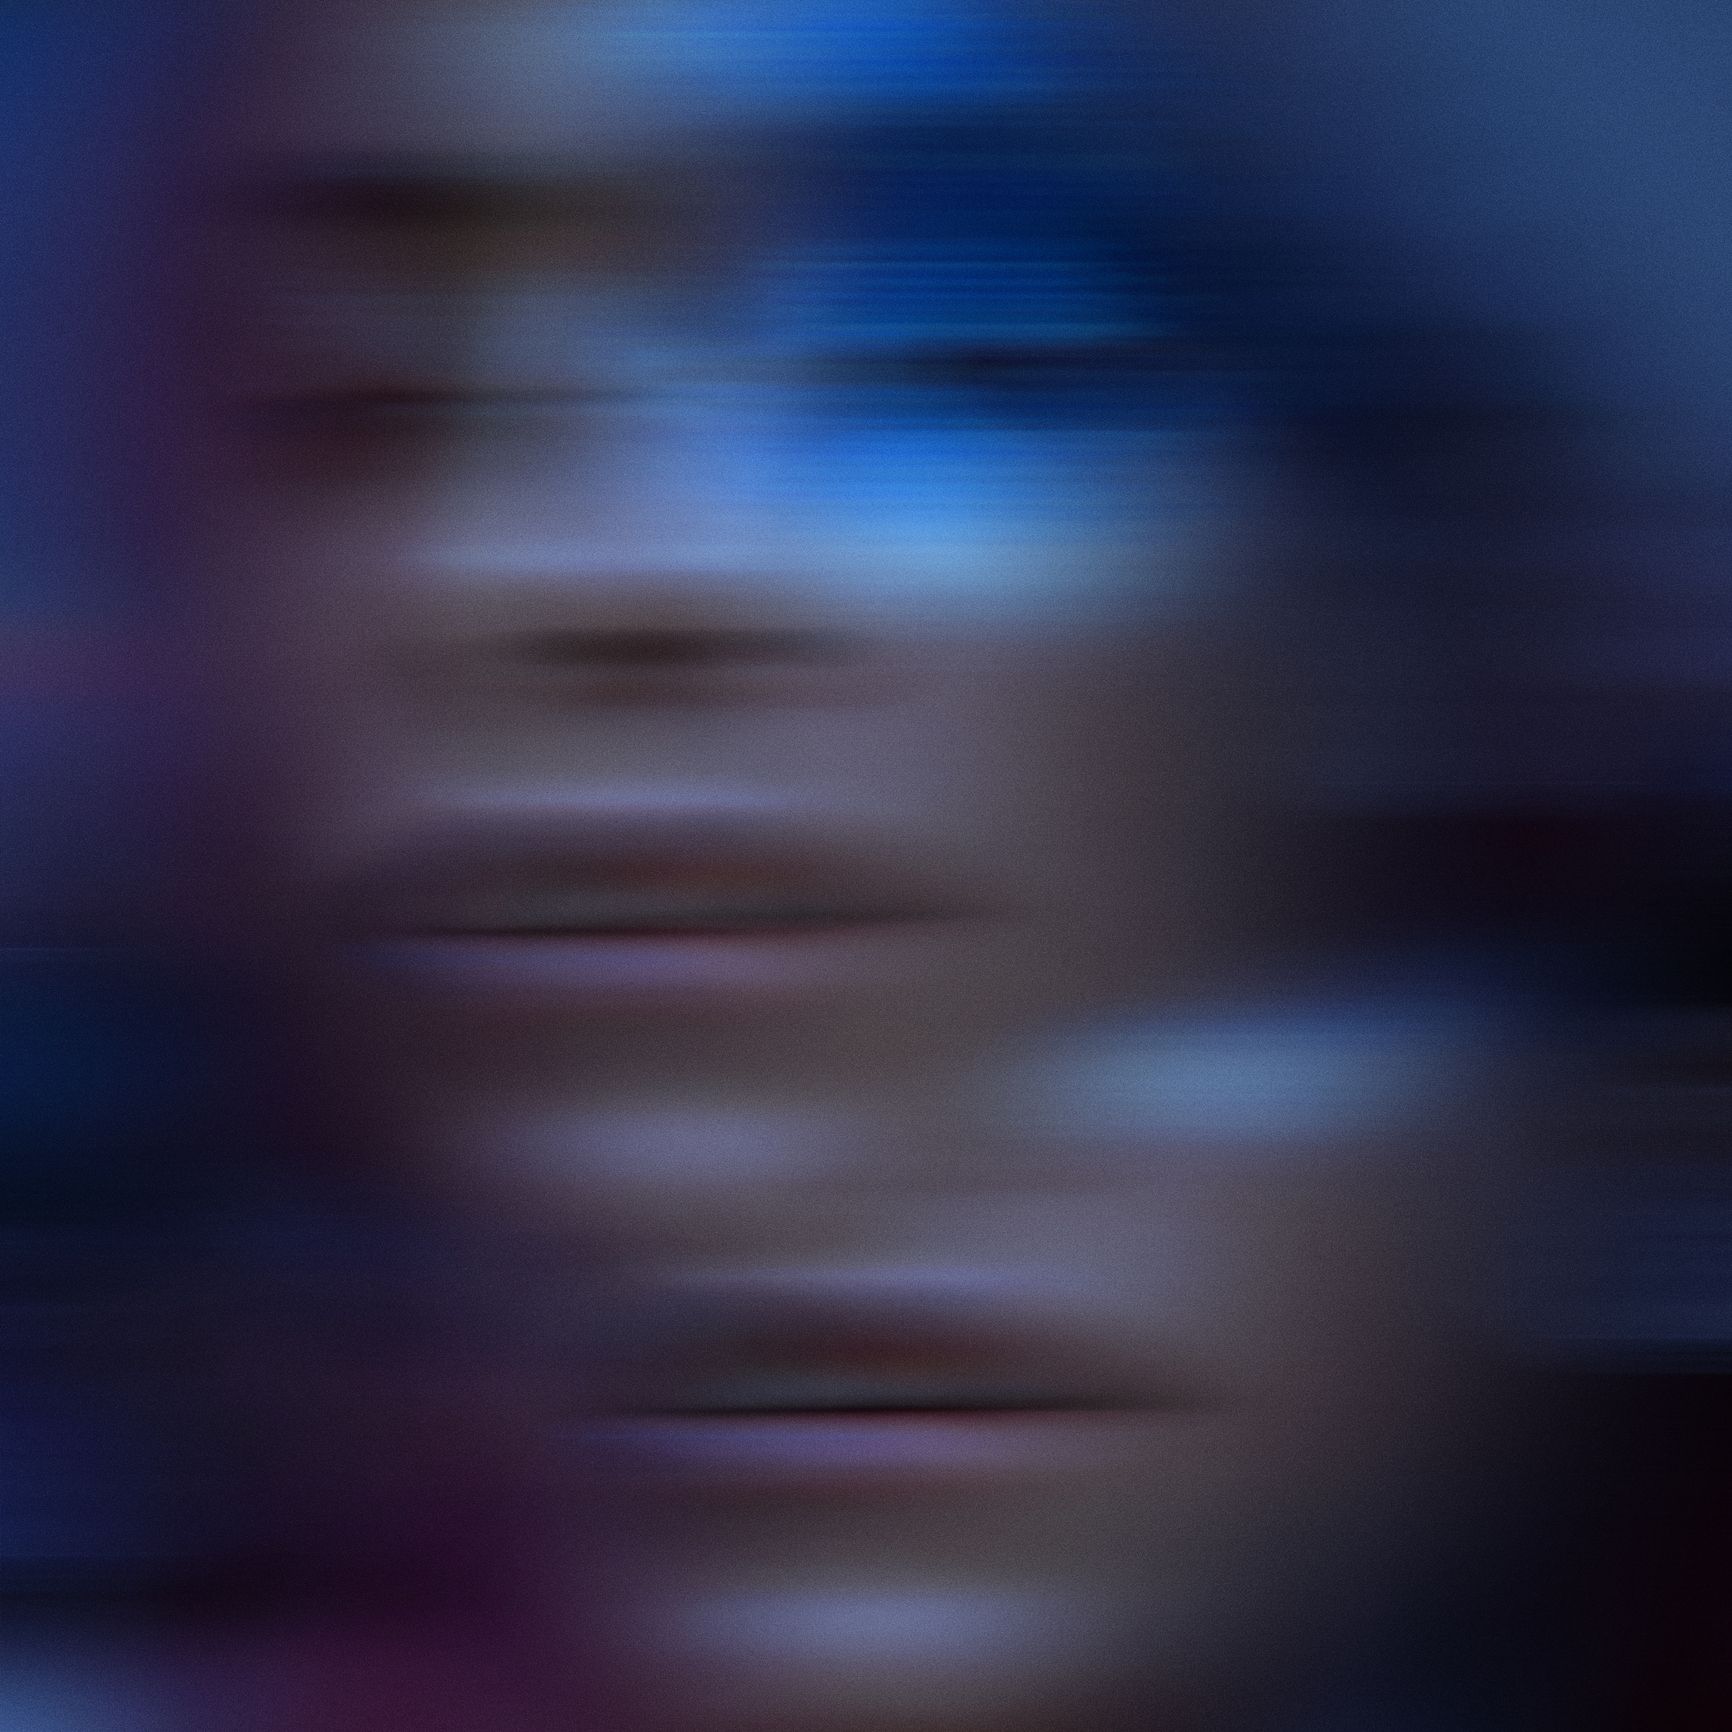 Blured motion portrait of female face in ultraviolet tones